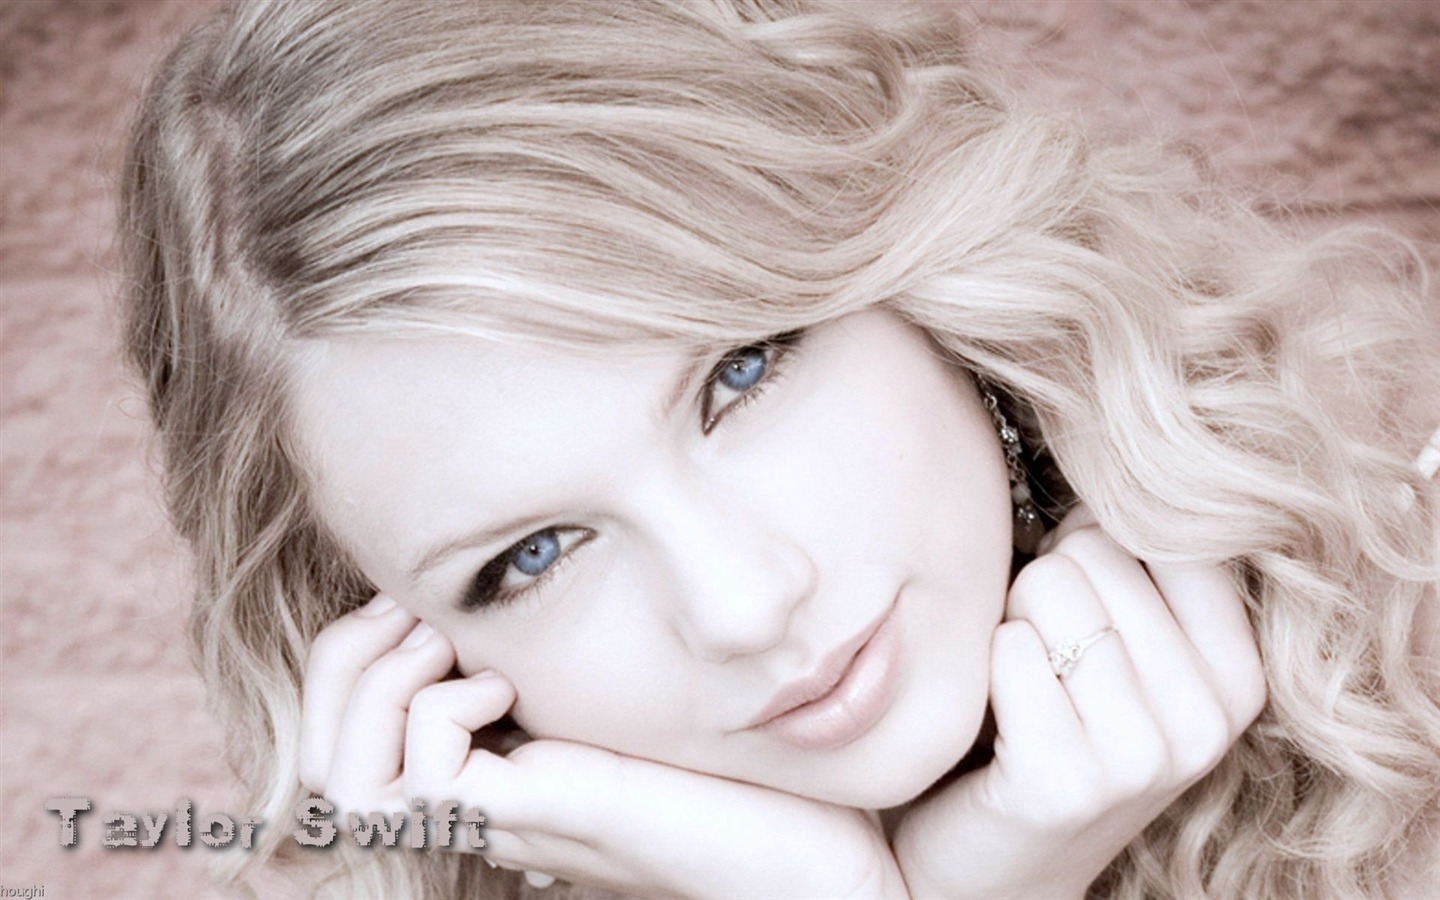 Taylor Swift beautiful wallpaper #3 - 1440x900